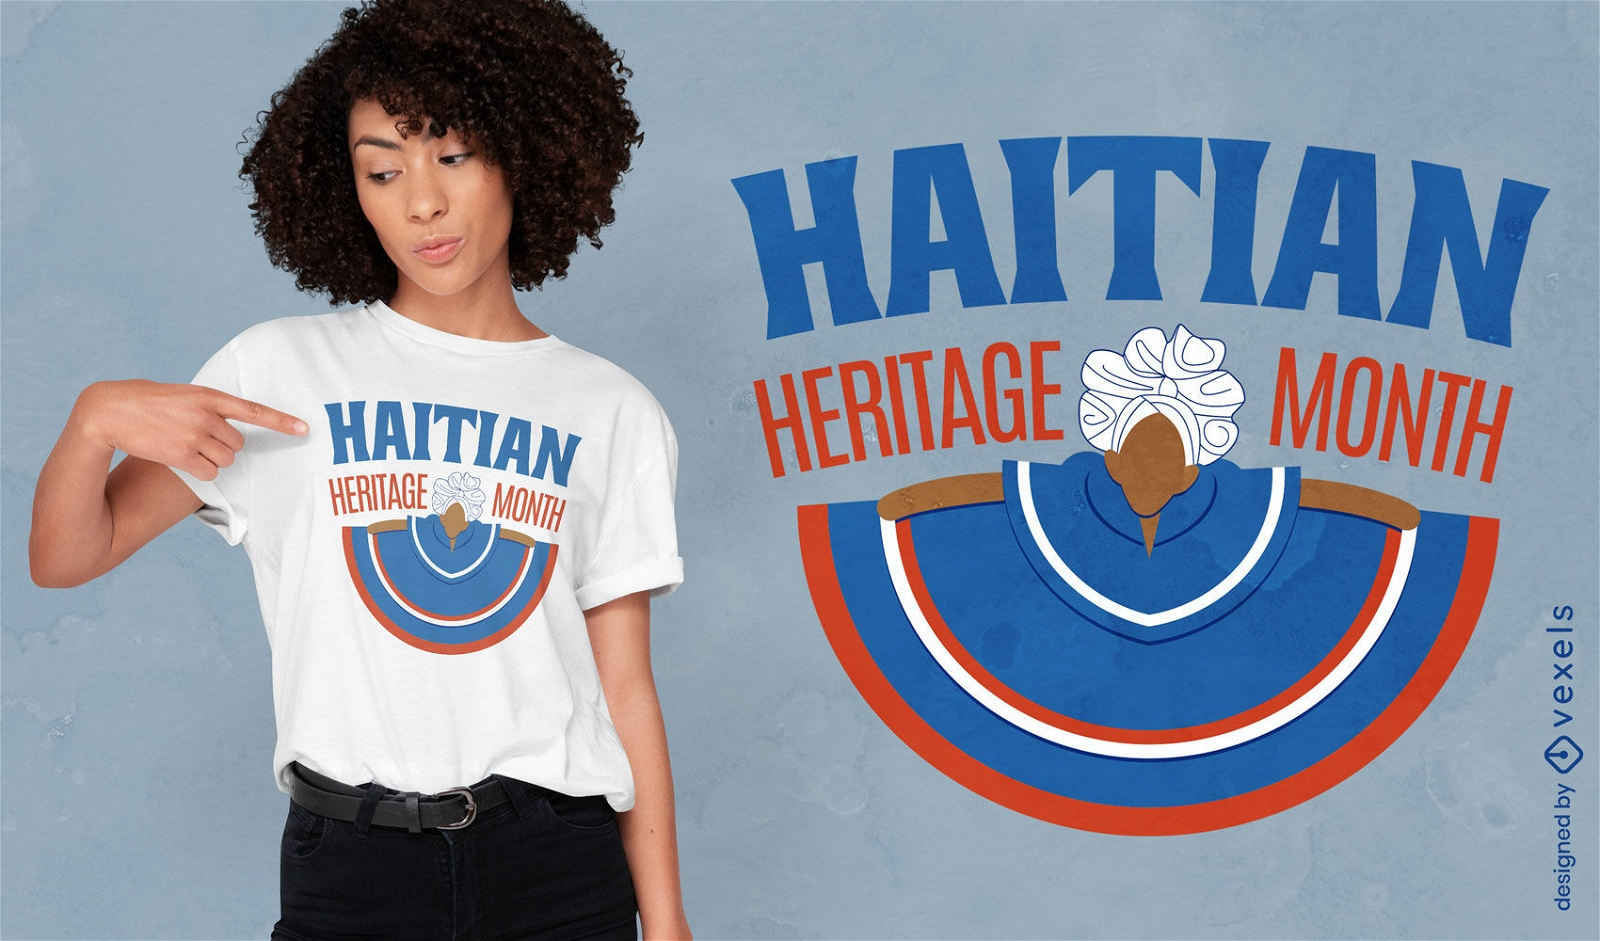 Haitian heritage month t-shirt design